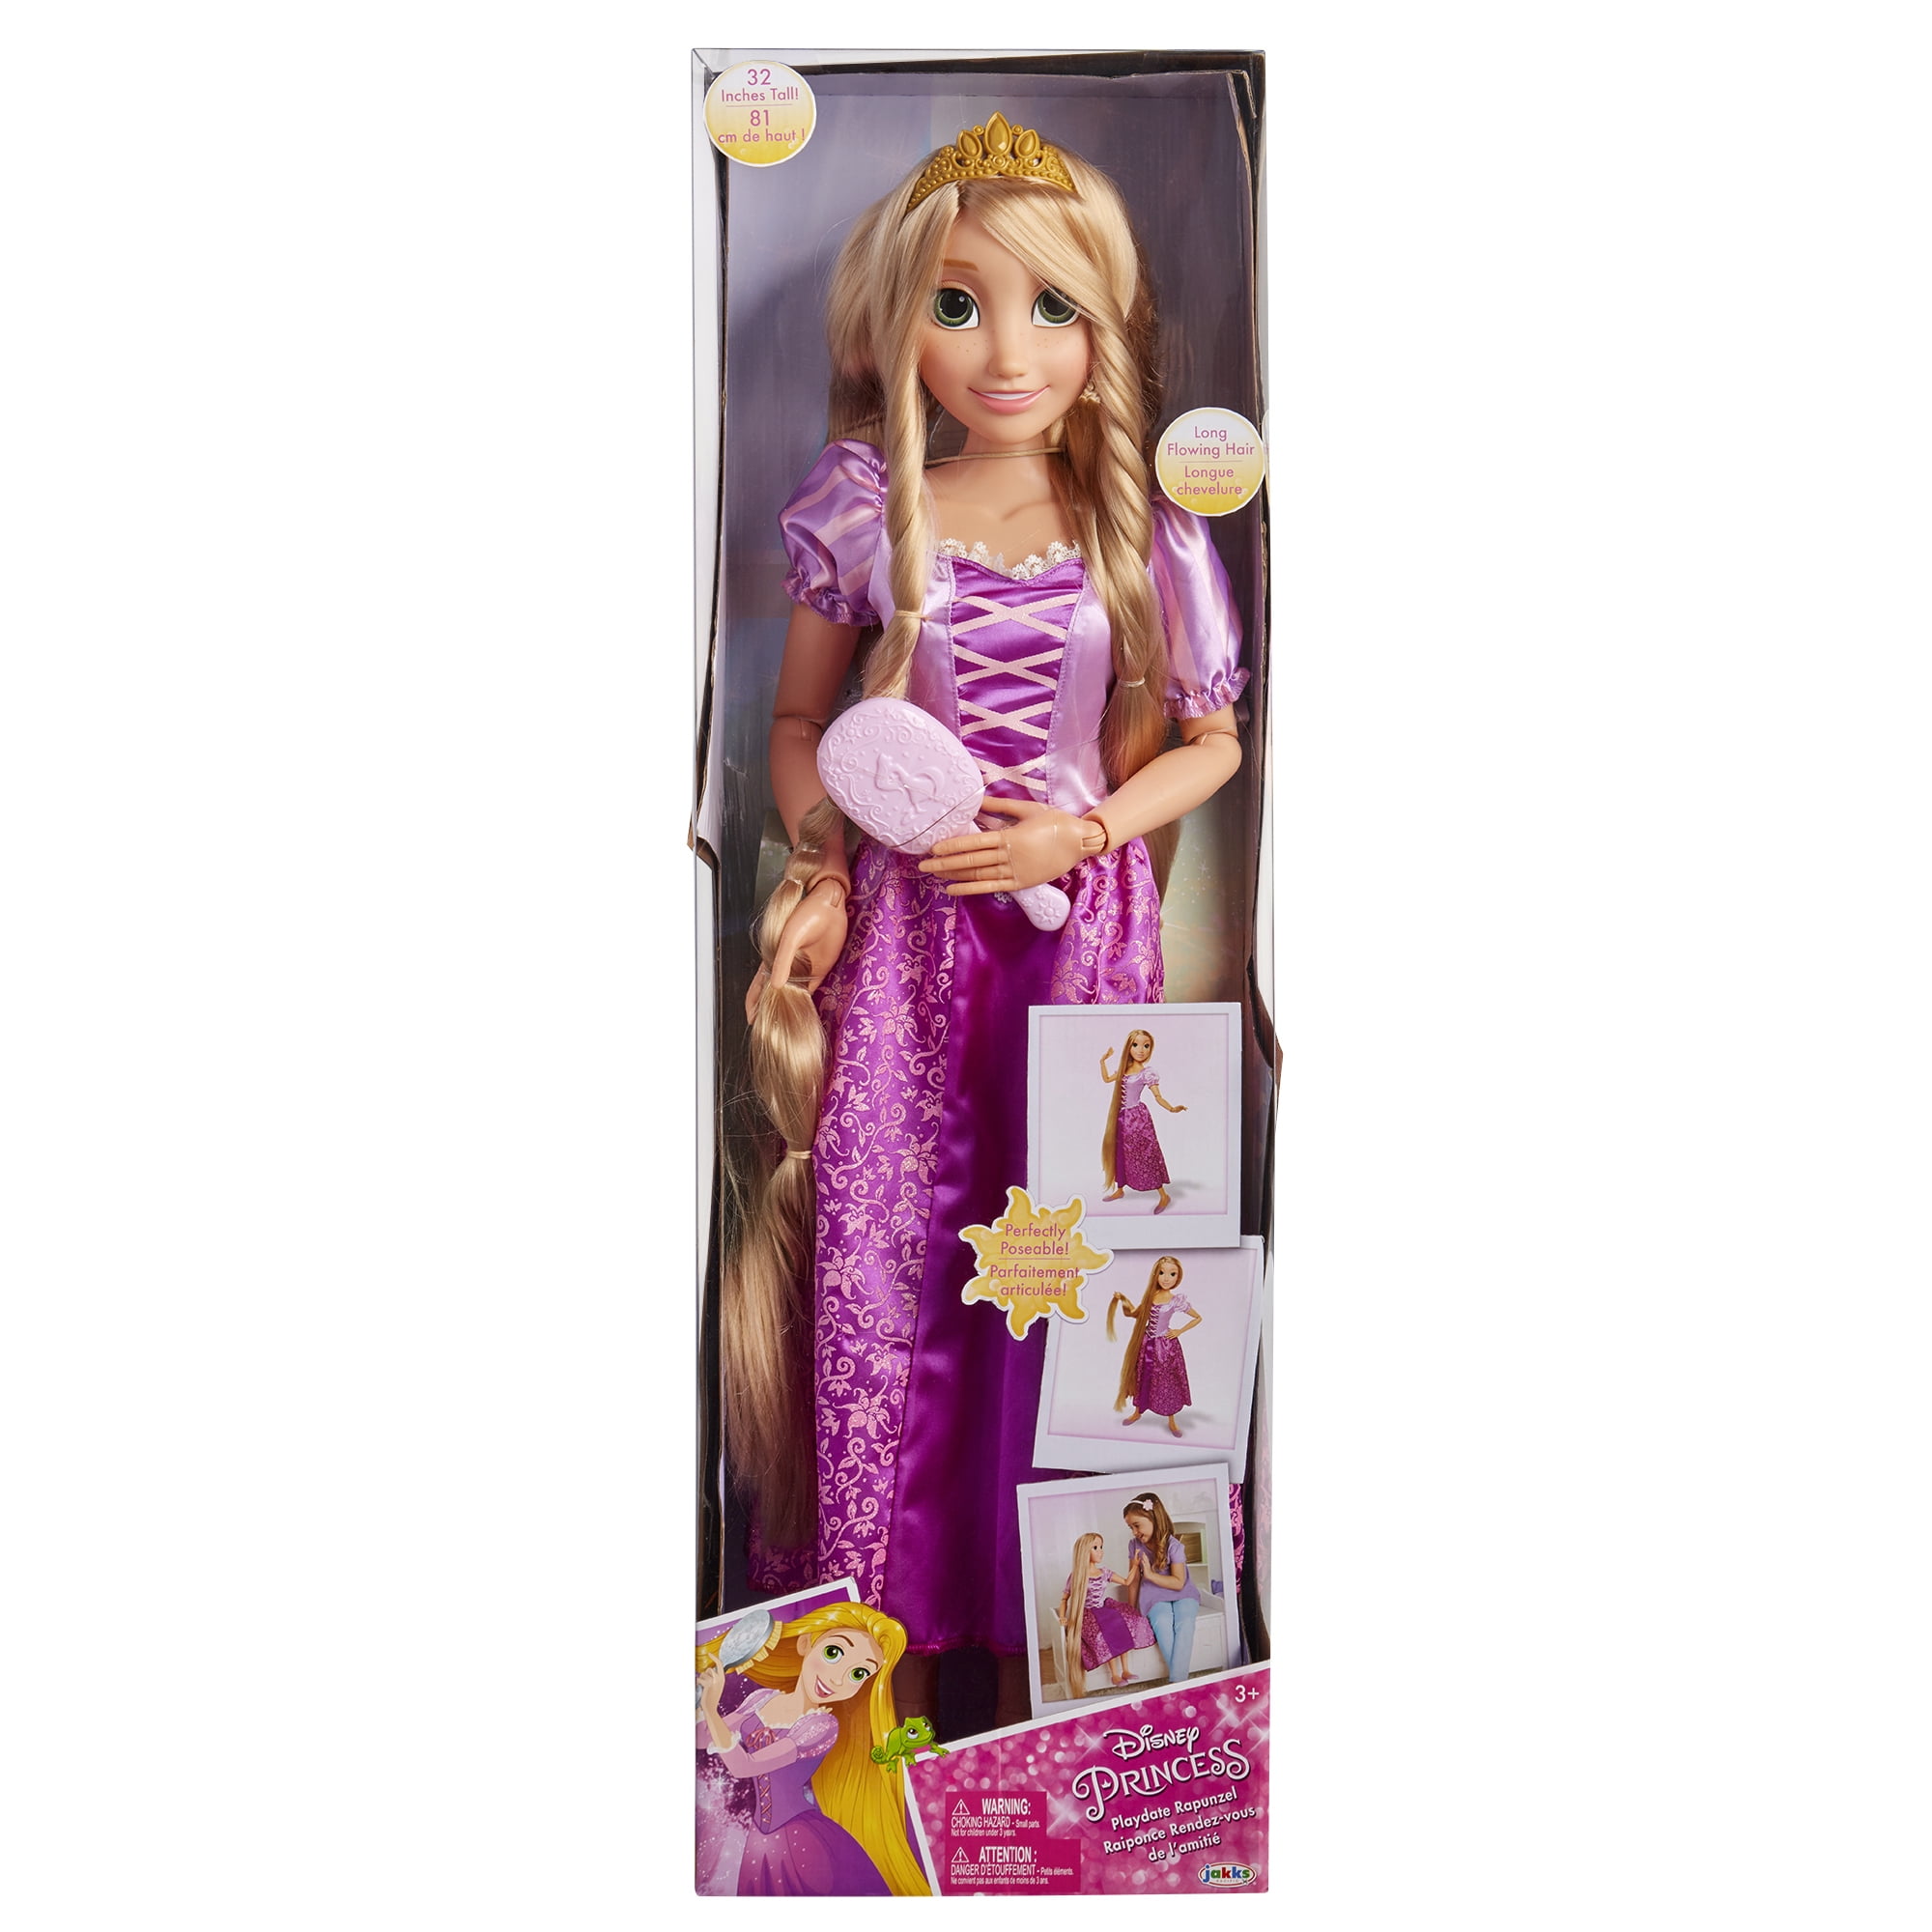 Disney Princess 32" Playdate Rapunzel Doll 